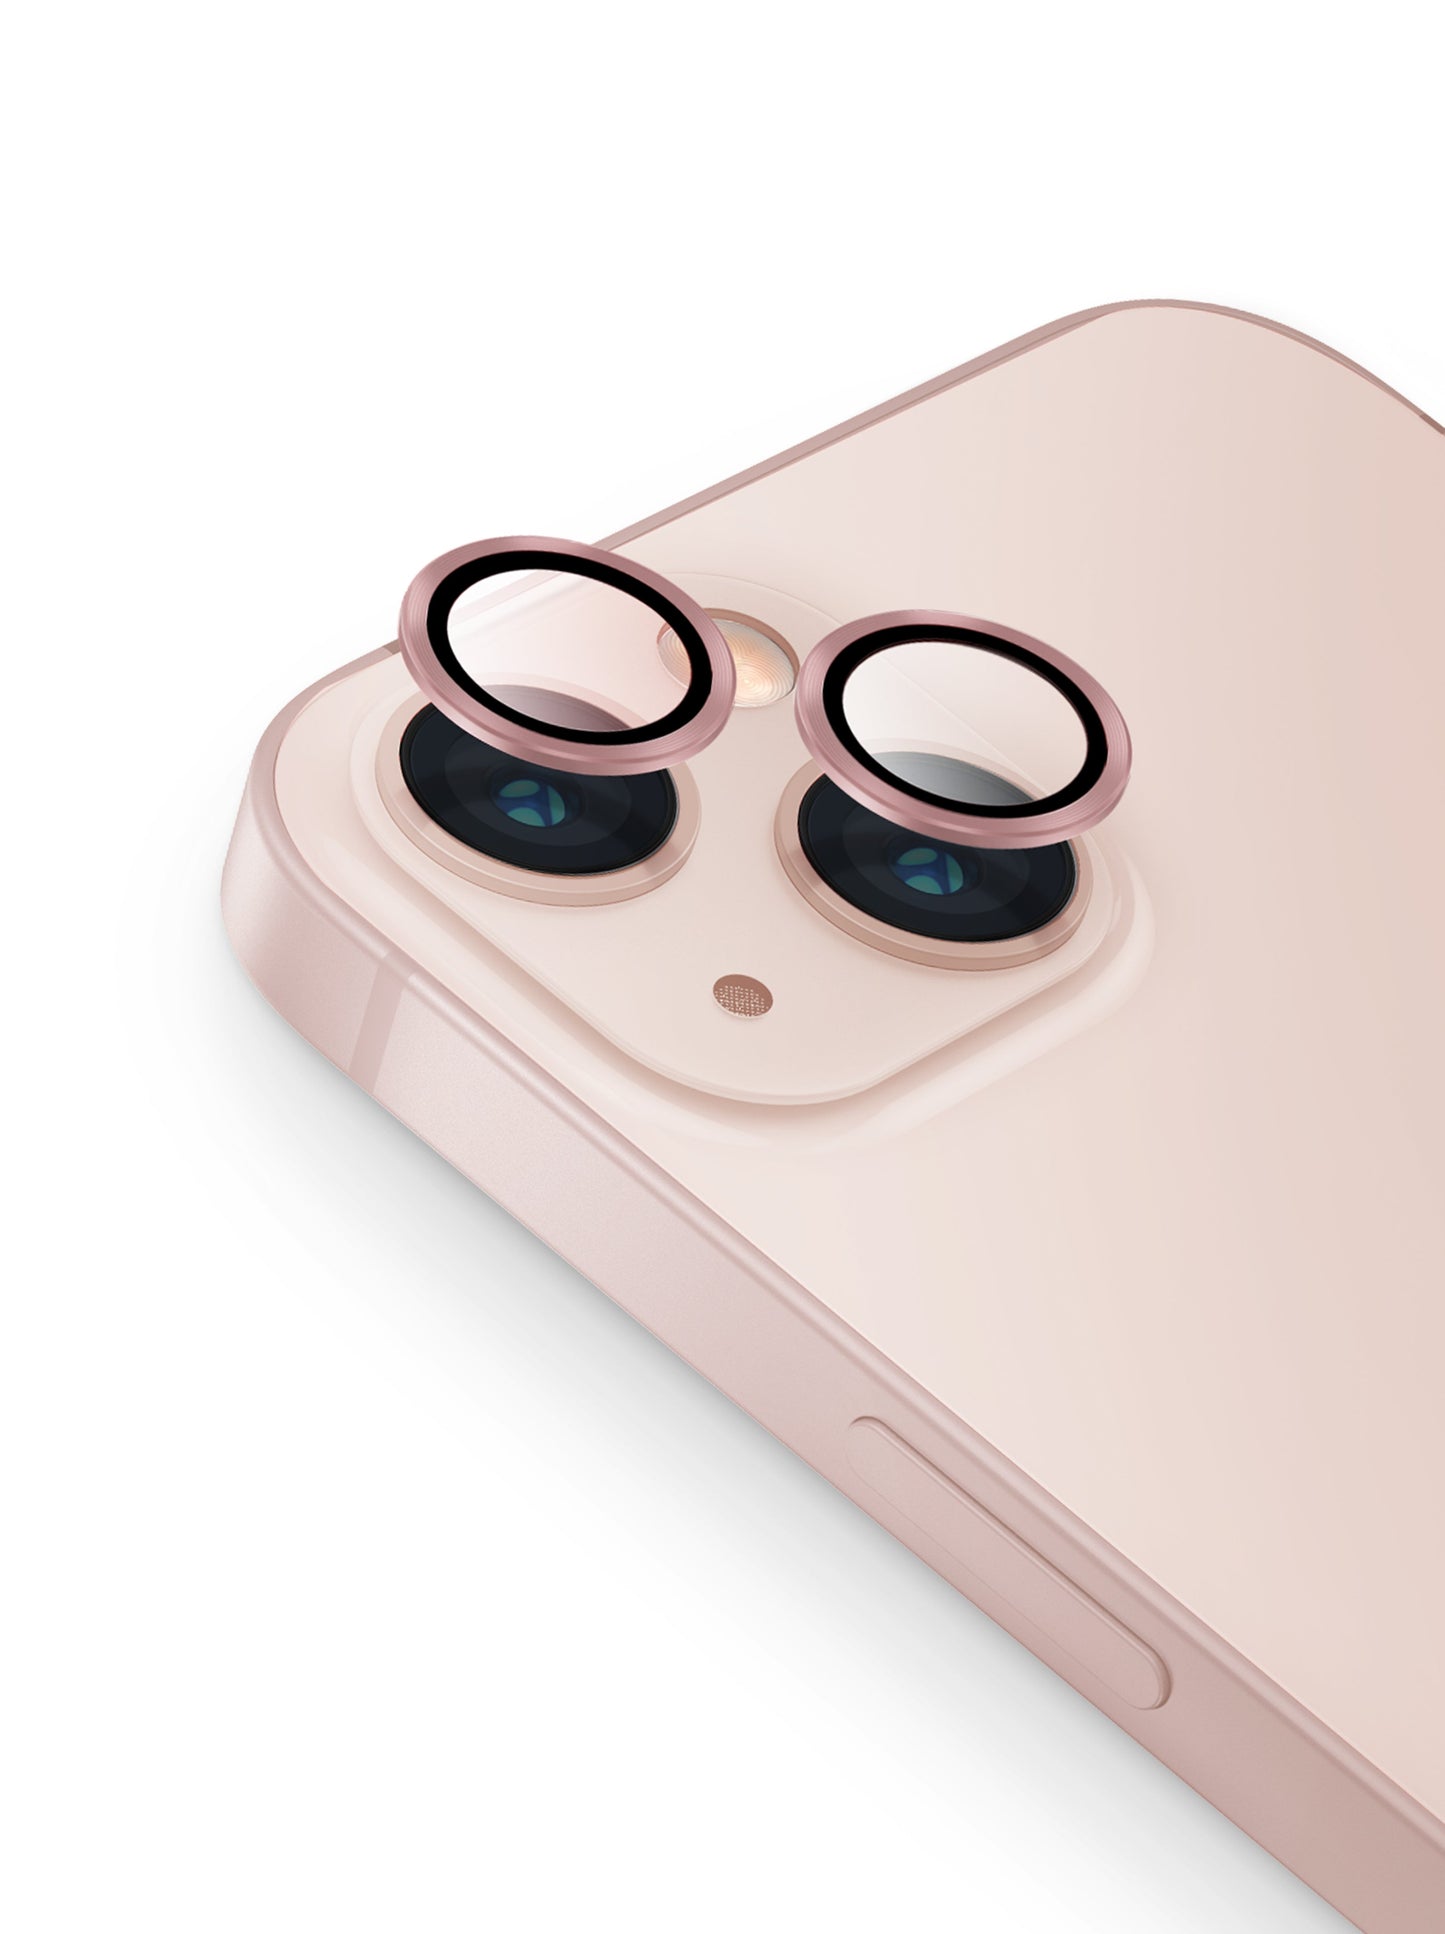 UNIQ optix iPhone 13 / 13 mini camera glass Protector - blush (pink)